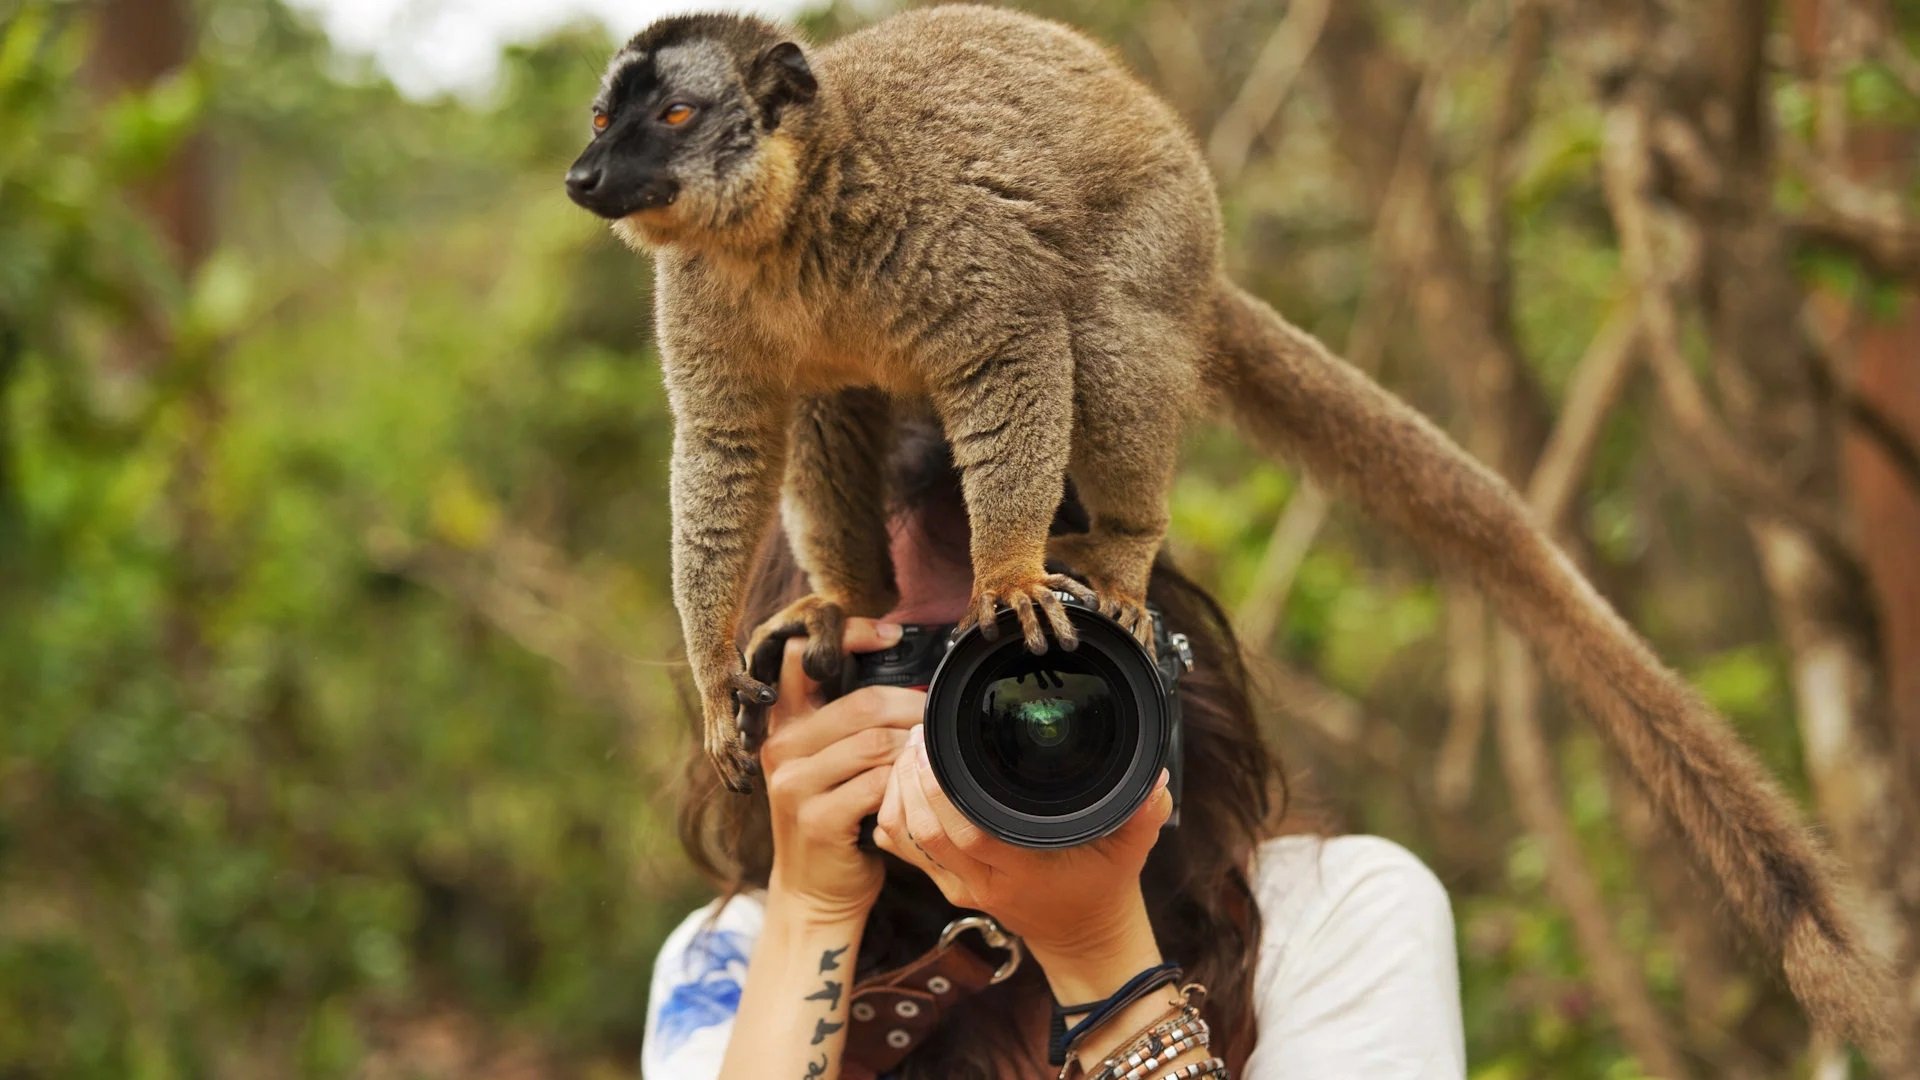 Wildlife photos. Животные с фотоаппаратом. Фотографирует животных. Люди и животные. Природа и животные.